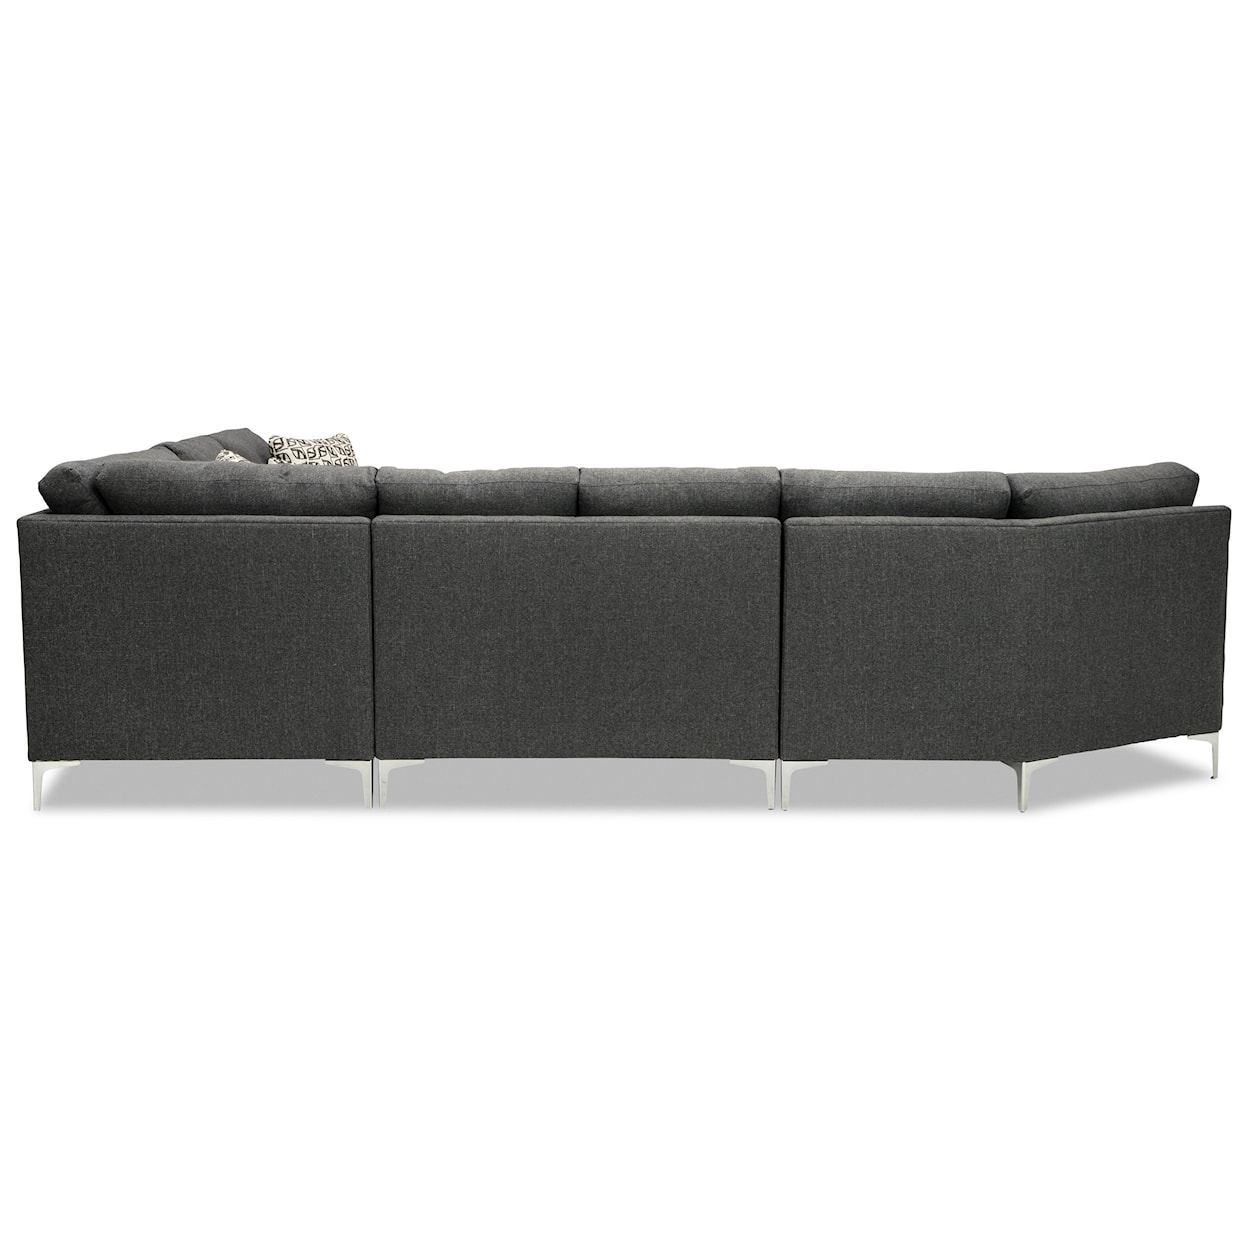 Craftmaster M9 Custom - Design Options 5-Seat Sectional Sofa w/ LAF Cuddler